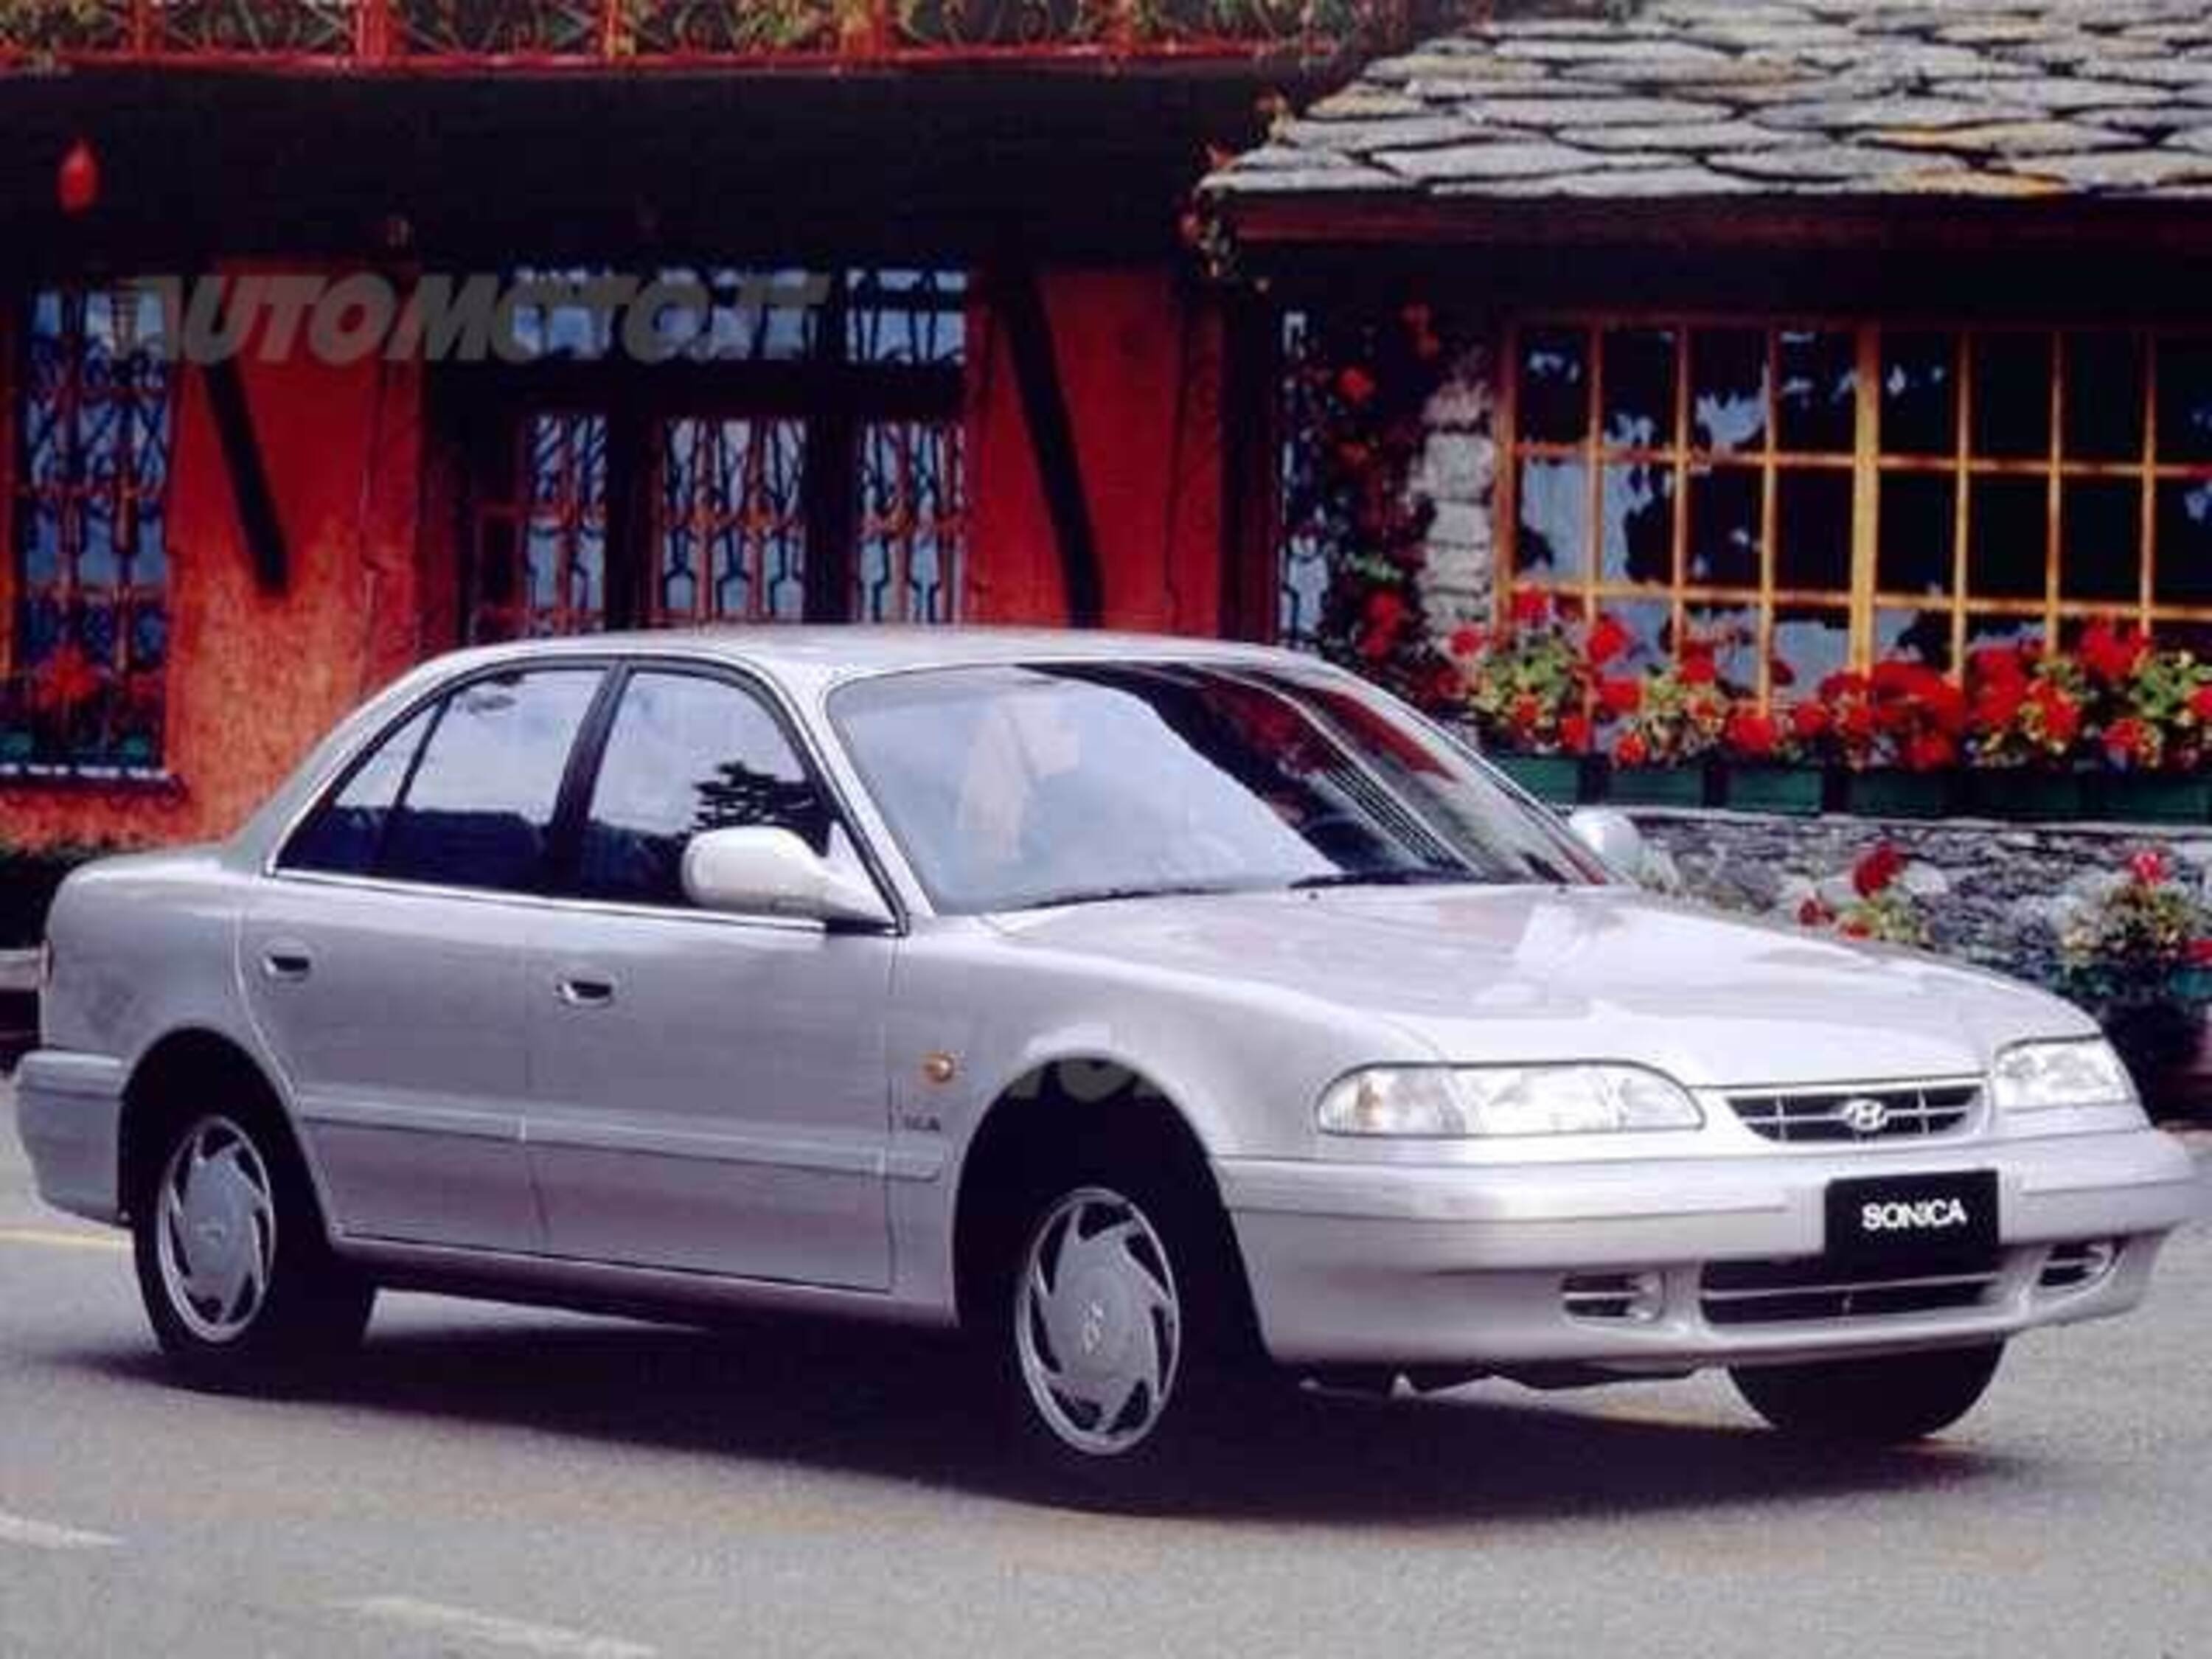 Hyundai Sonica/Sonata (1989-96)